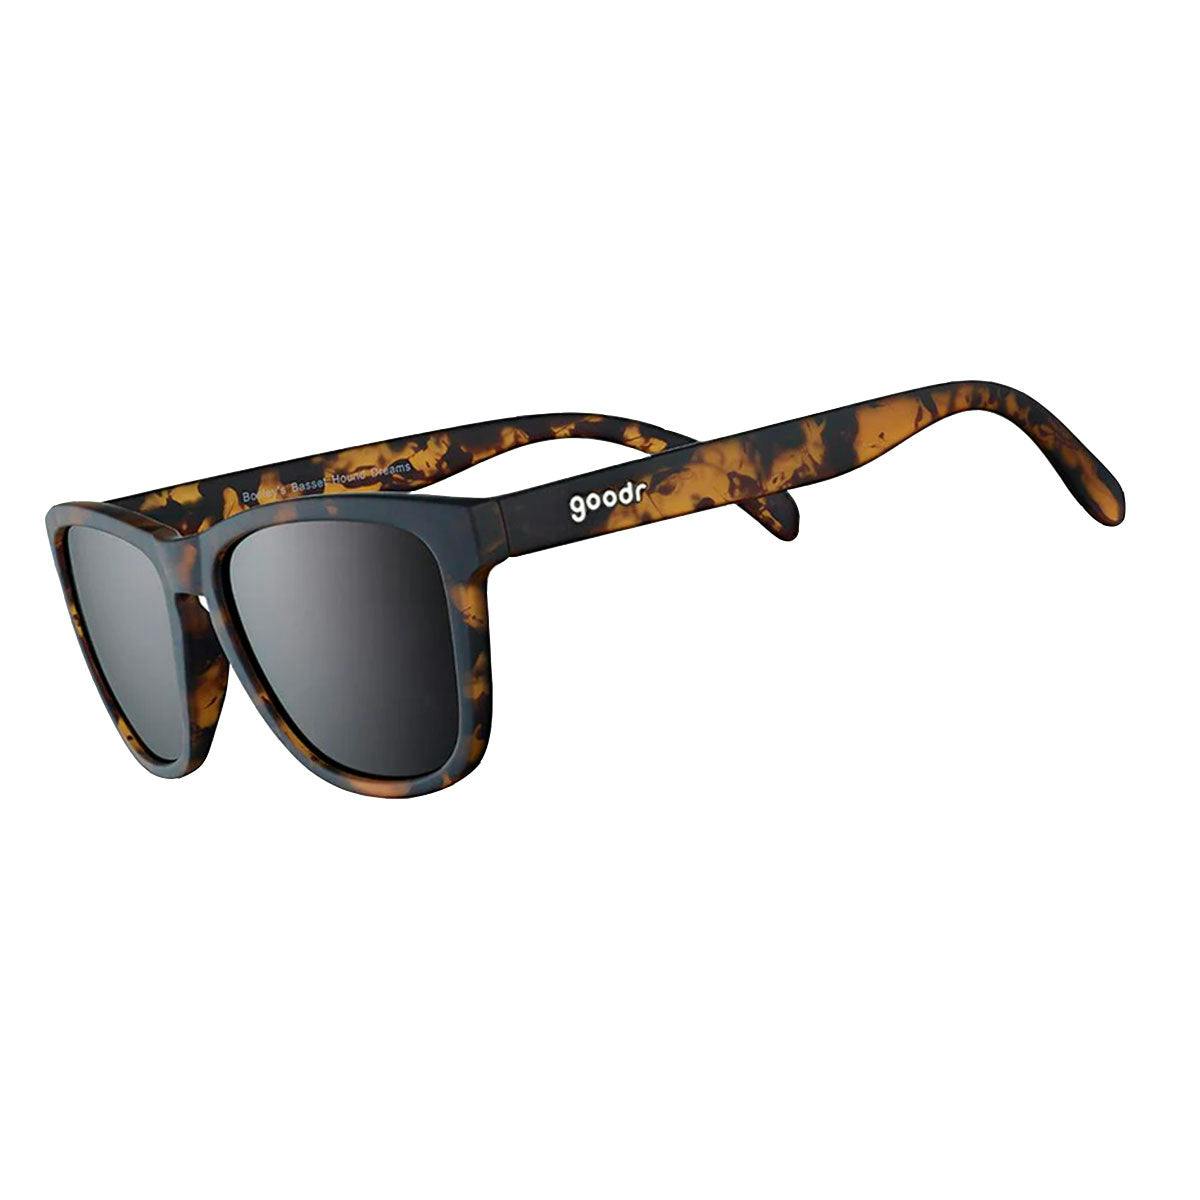 Goodr Bosleys Basset Hound Dreams Sunglasses - One Size